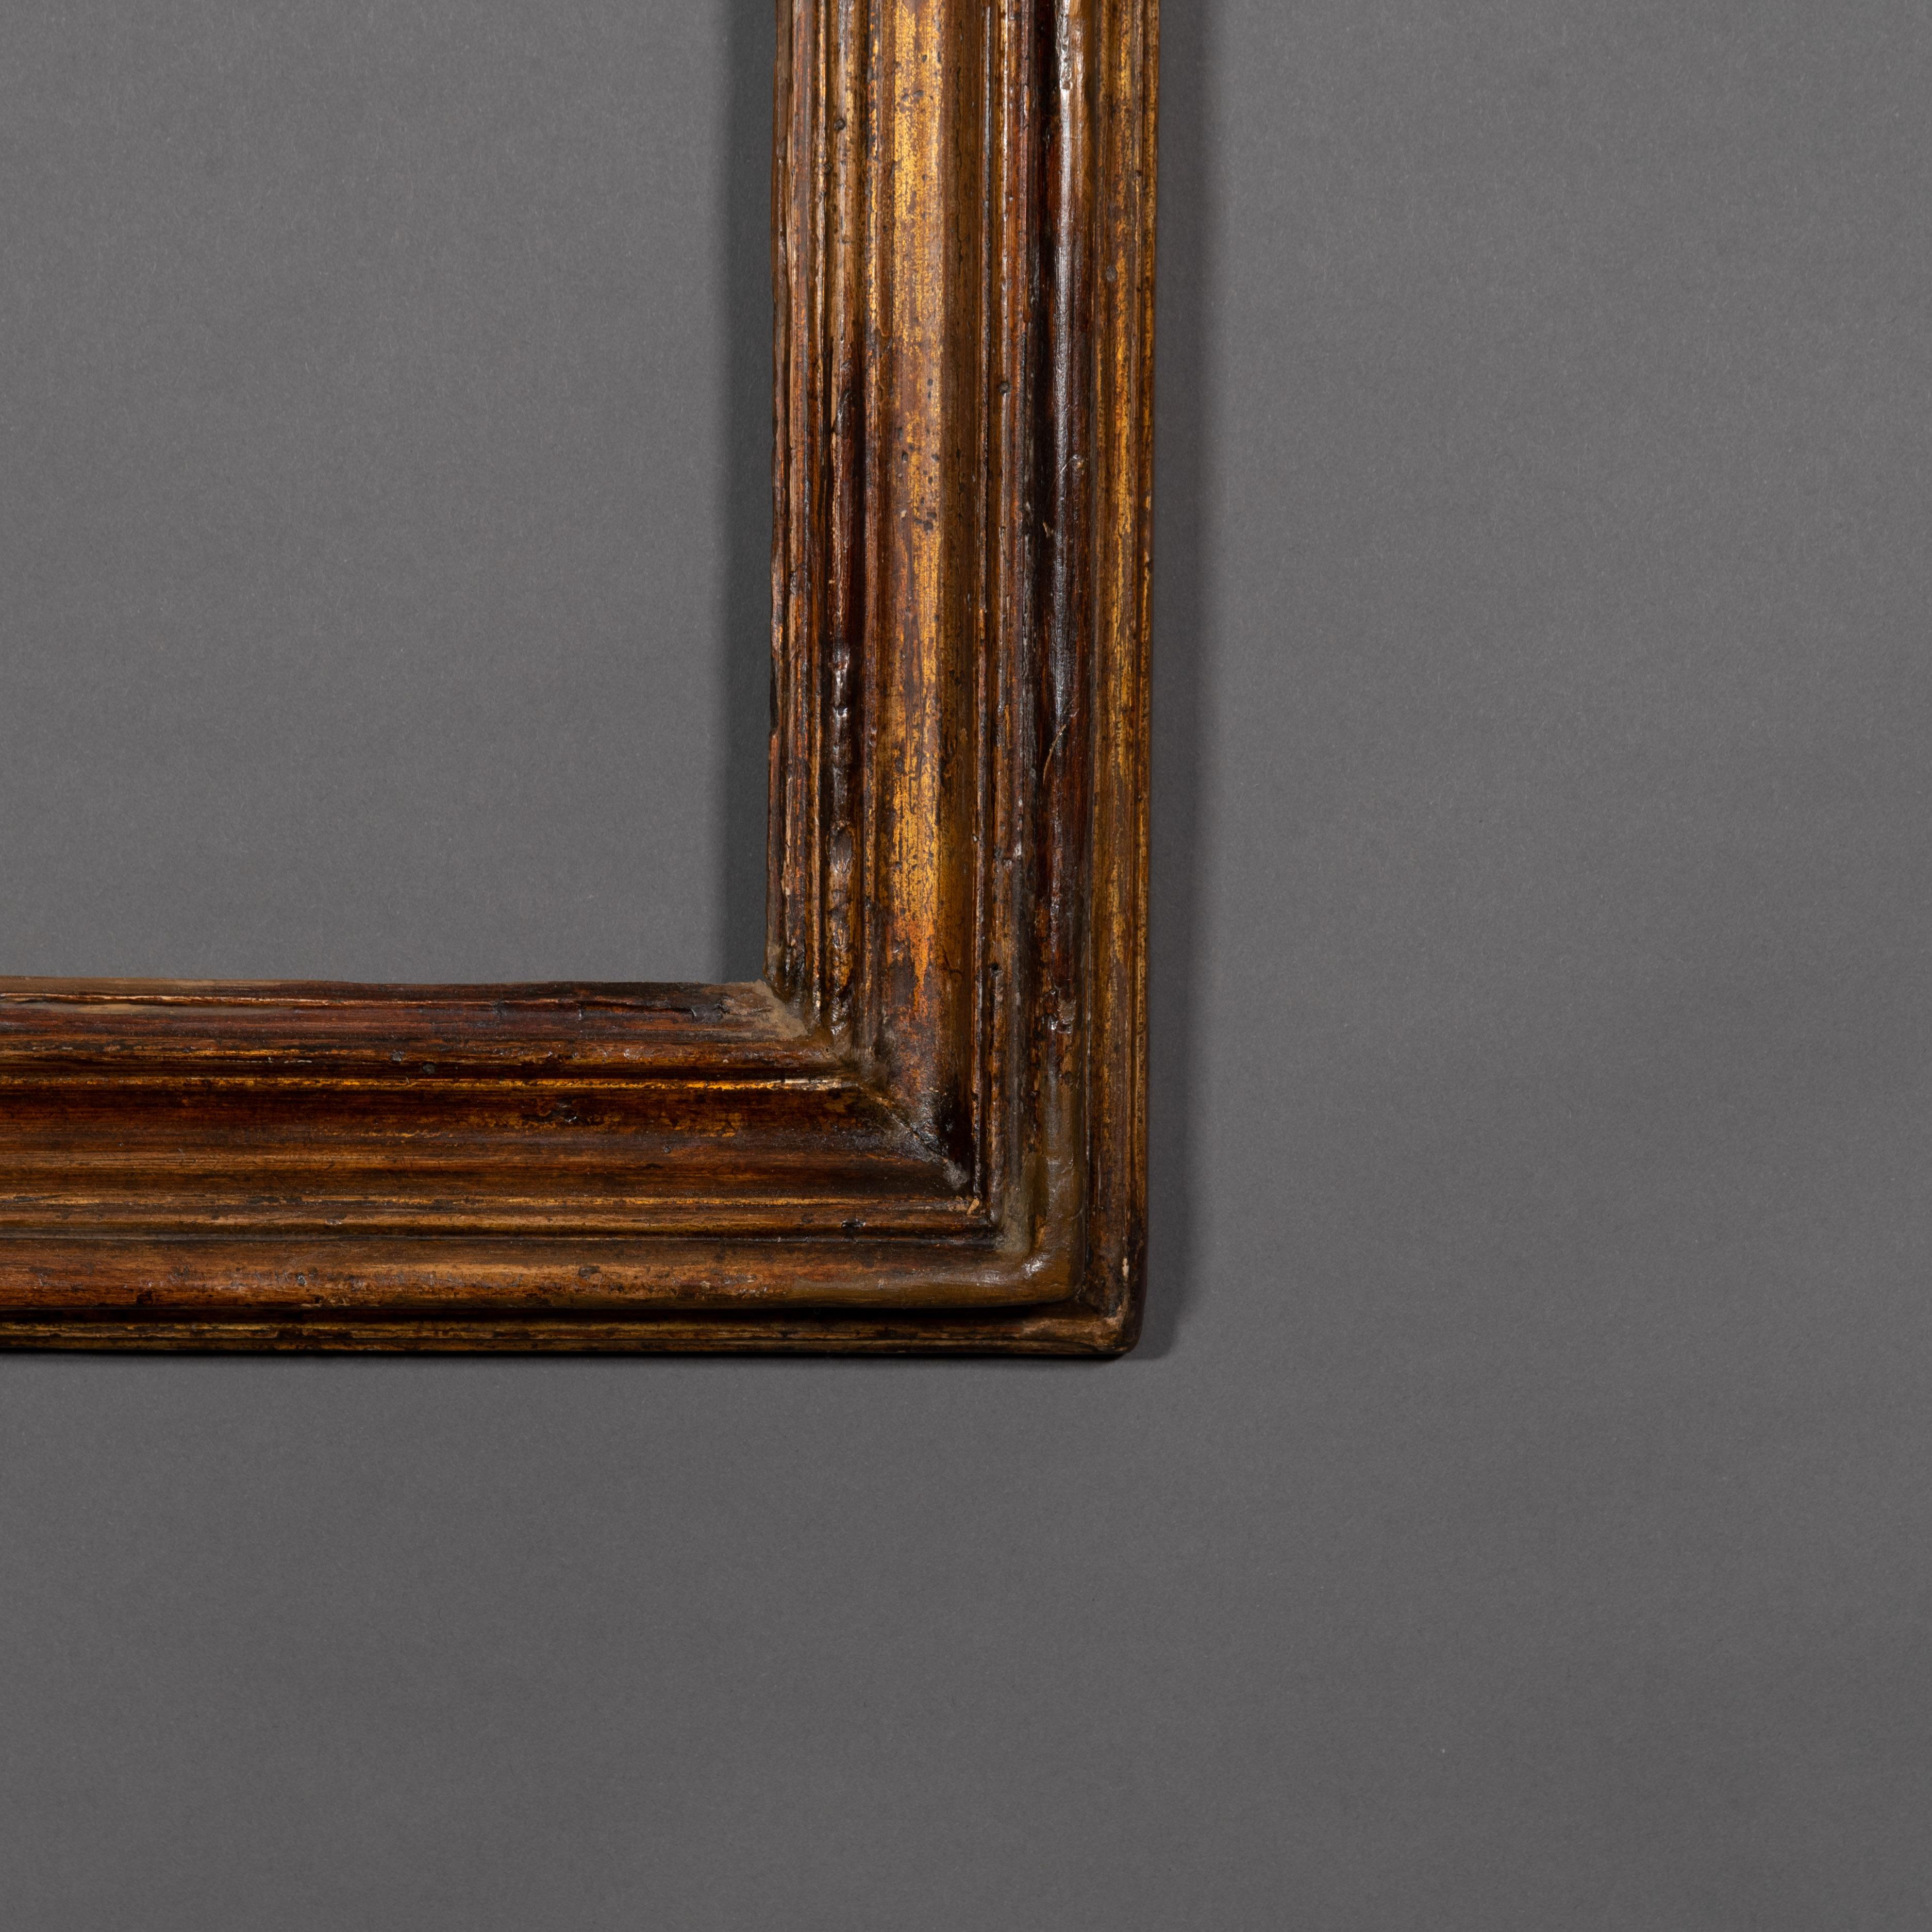 Salvator Rosa last 17th century giltwood frame.
Internal measurements cm 32 x 41

Pure example of Italian Salvator Rosa gild wood frame of 17th century.
